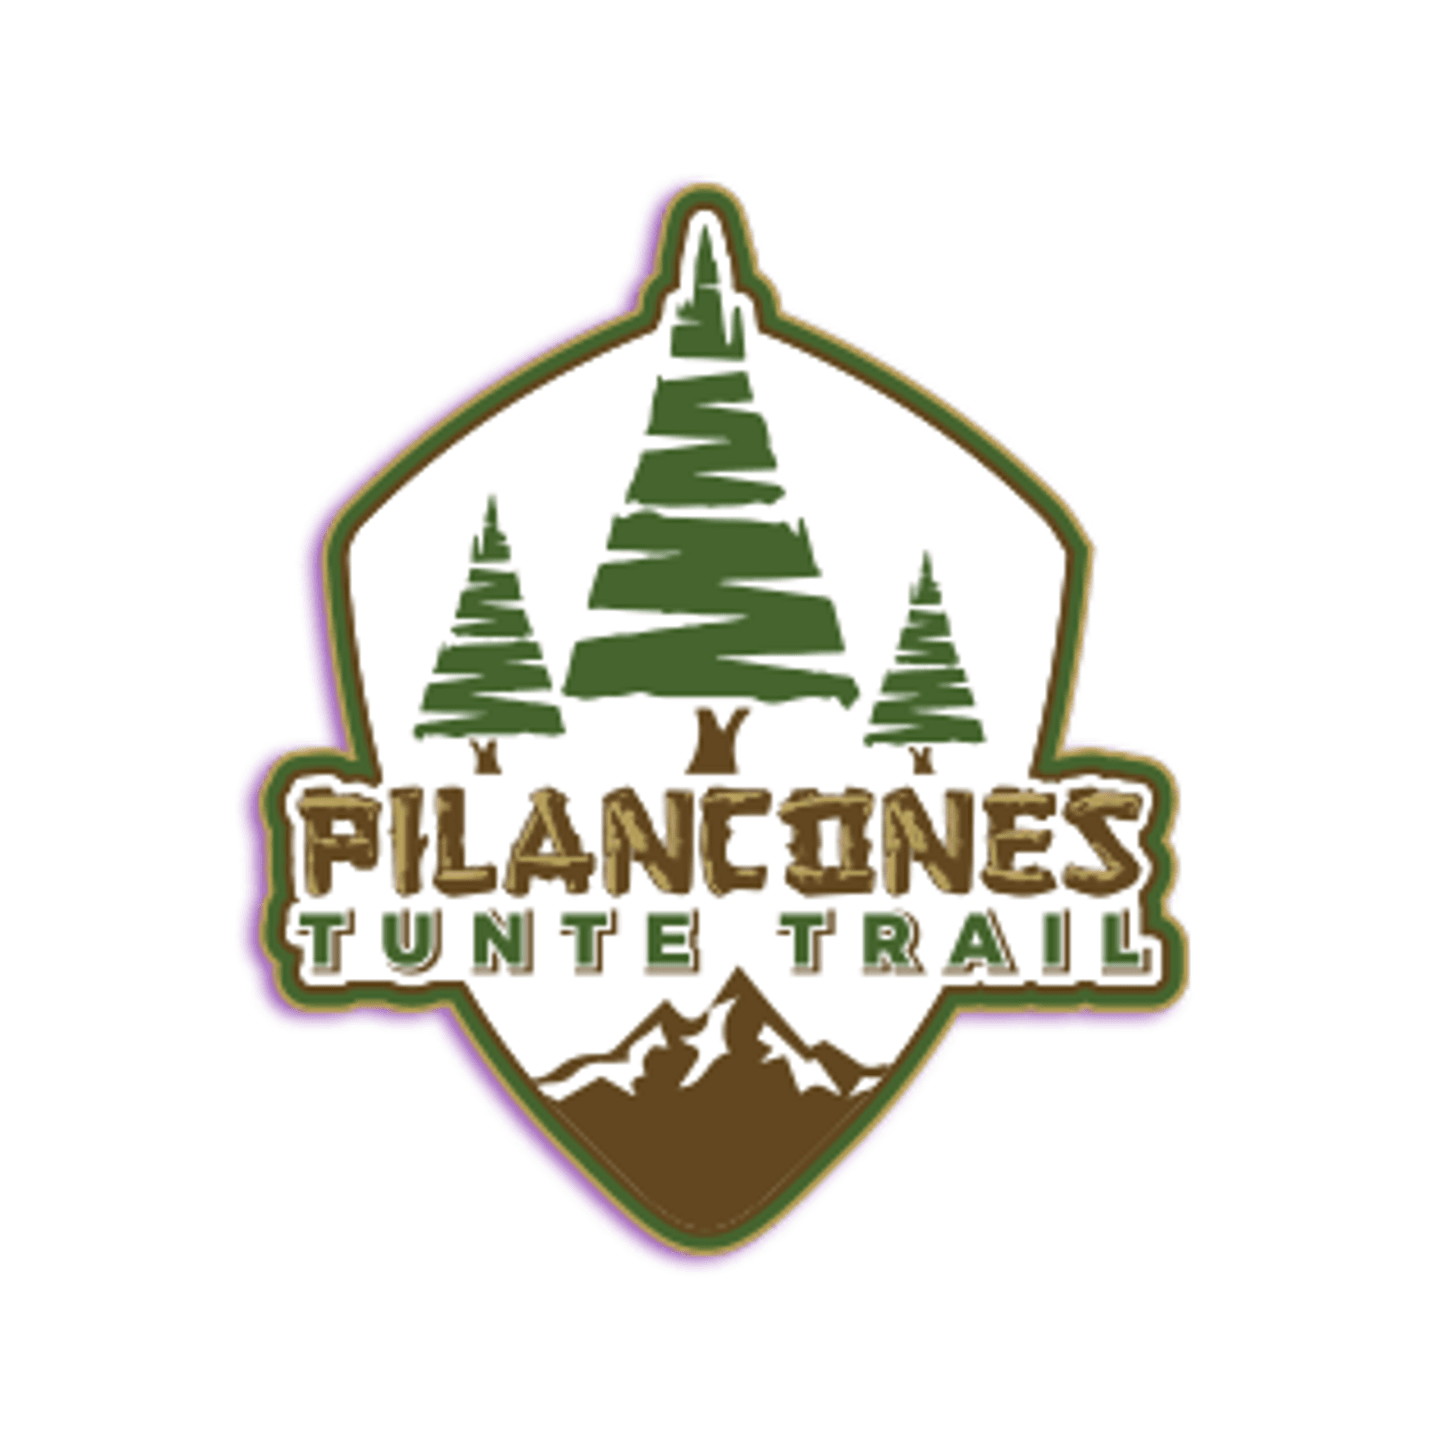 Logo-Pilancones Tunte Trail